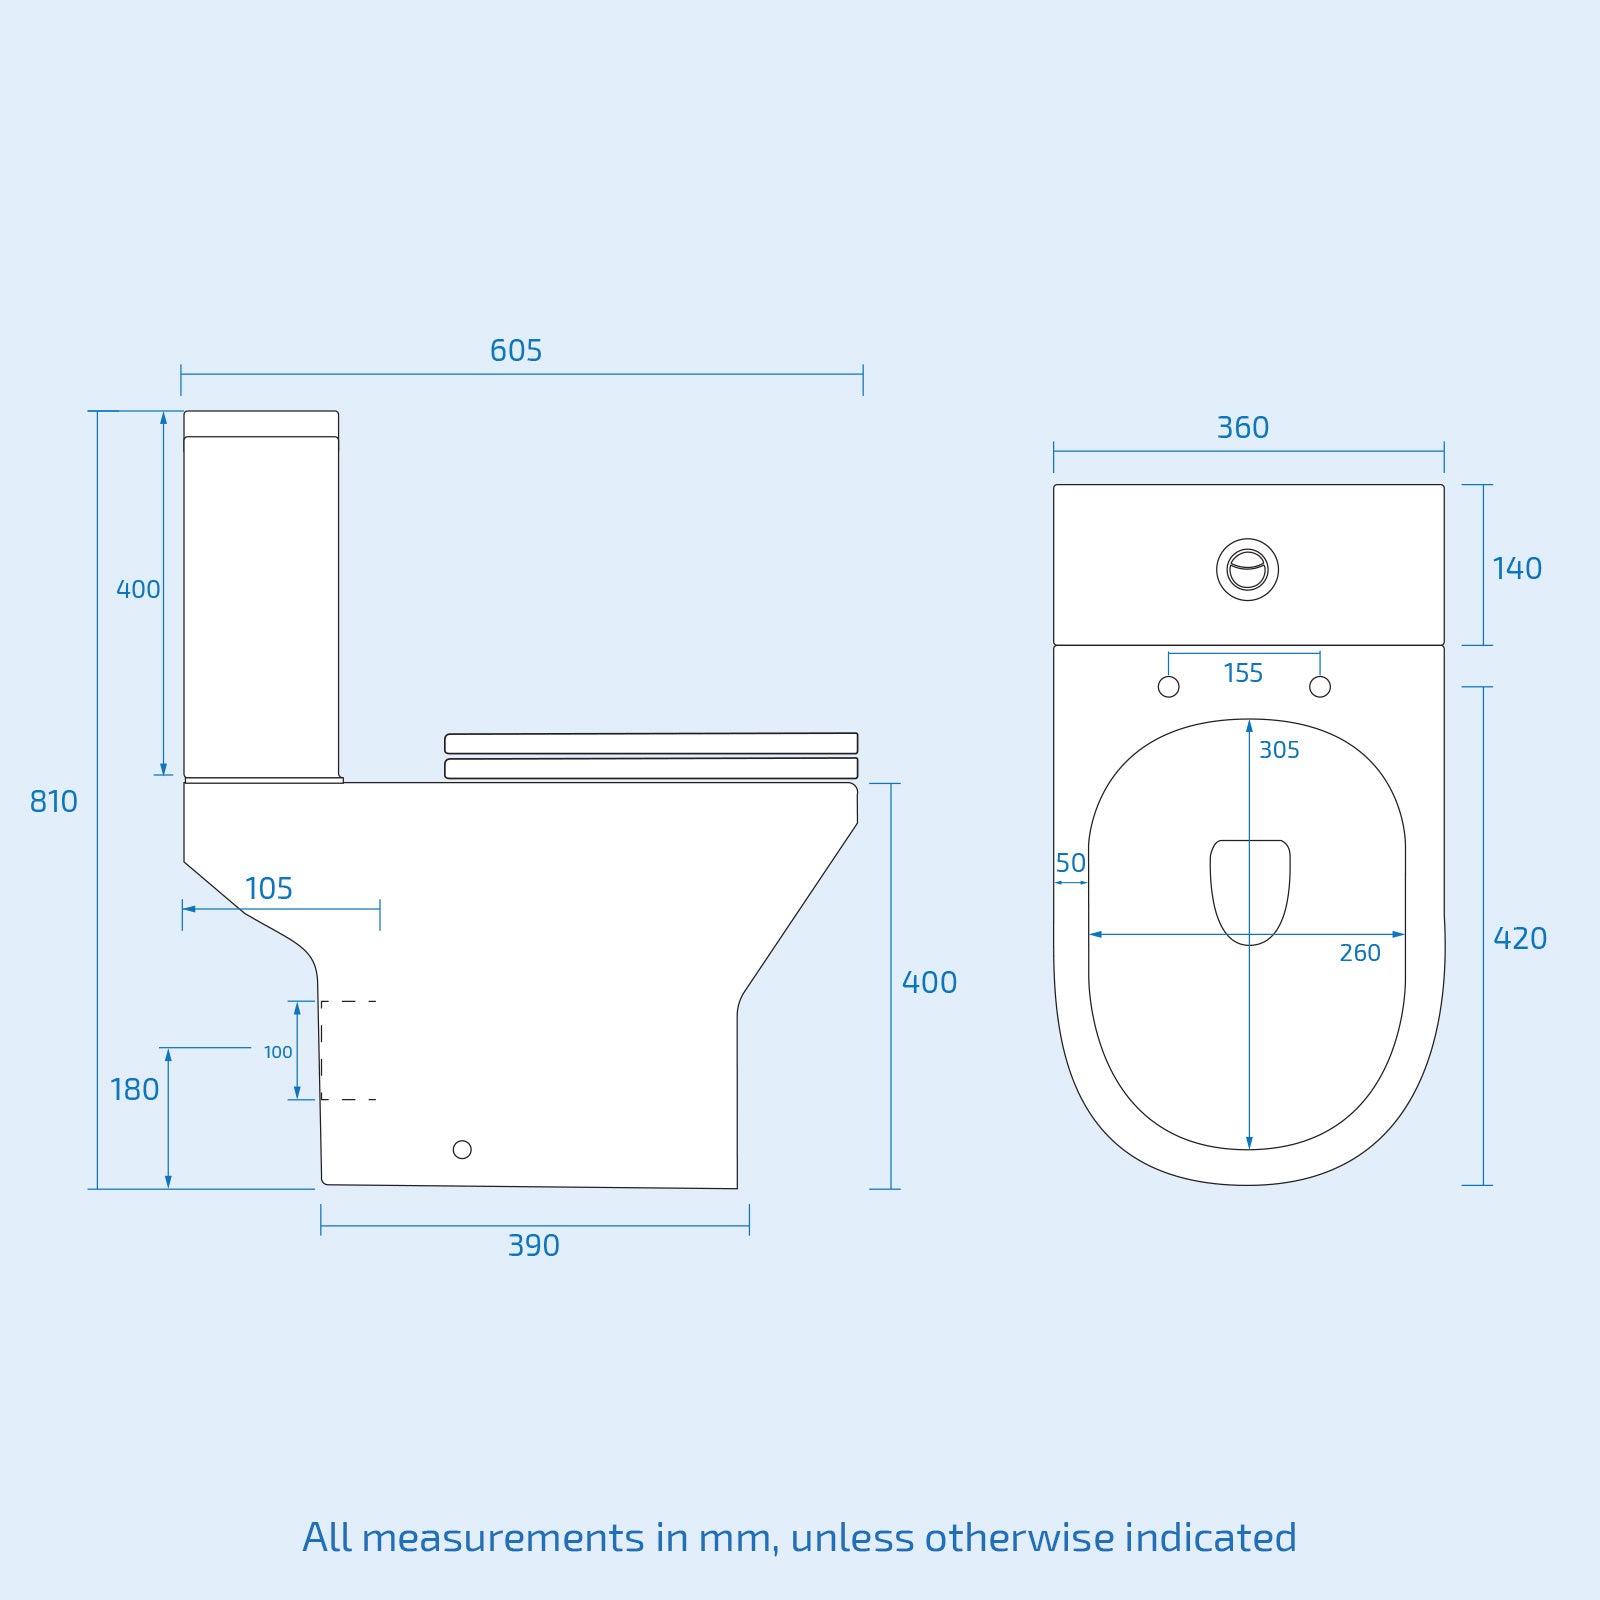 Nanuya White 500mm 2 Drawers Basin Vanity and Close Coupled Toilet